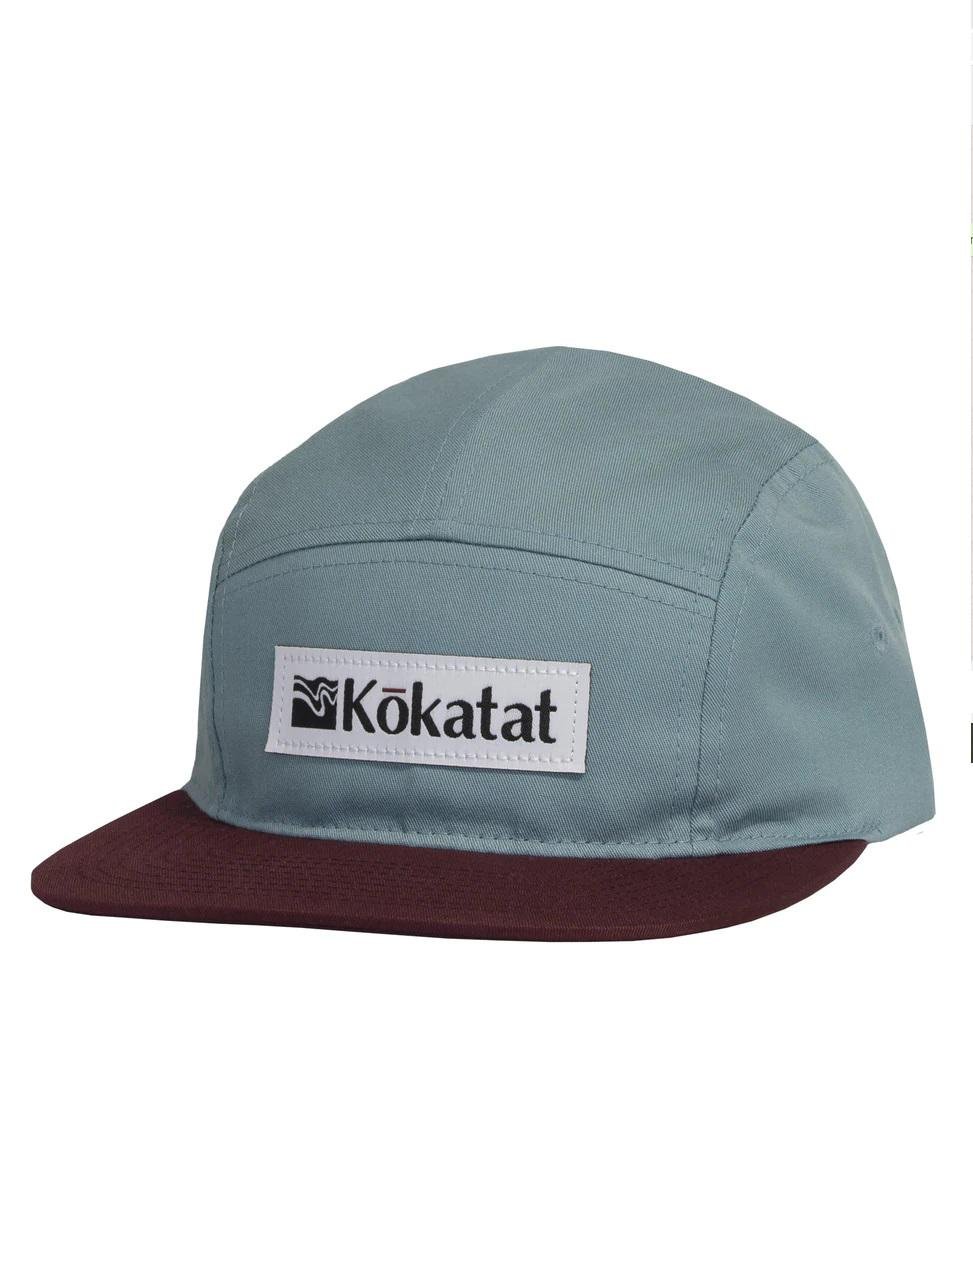 Gorro Kokatat Hustle Hat - Tamaño: Univ, Color: Turquesa